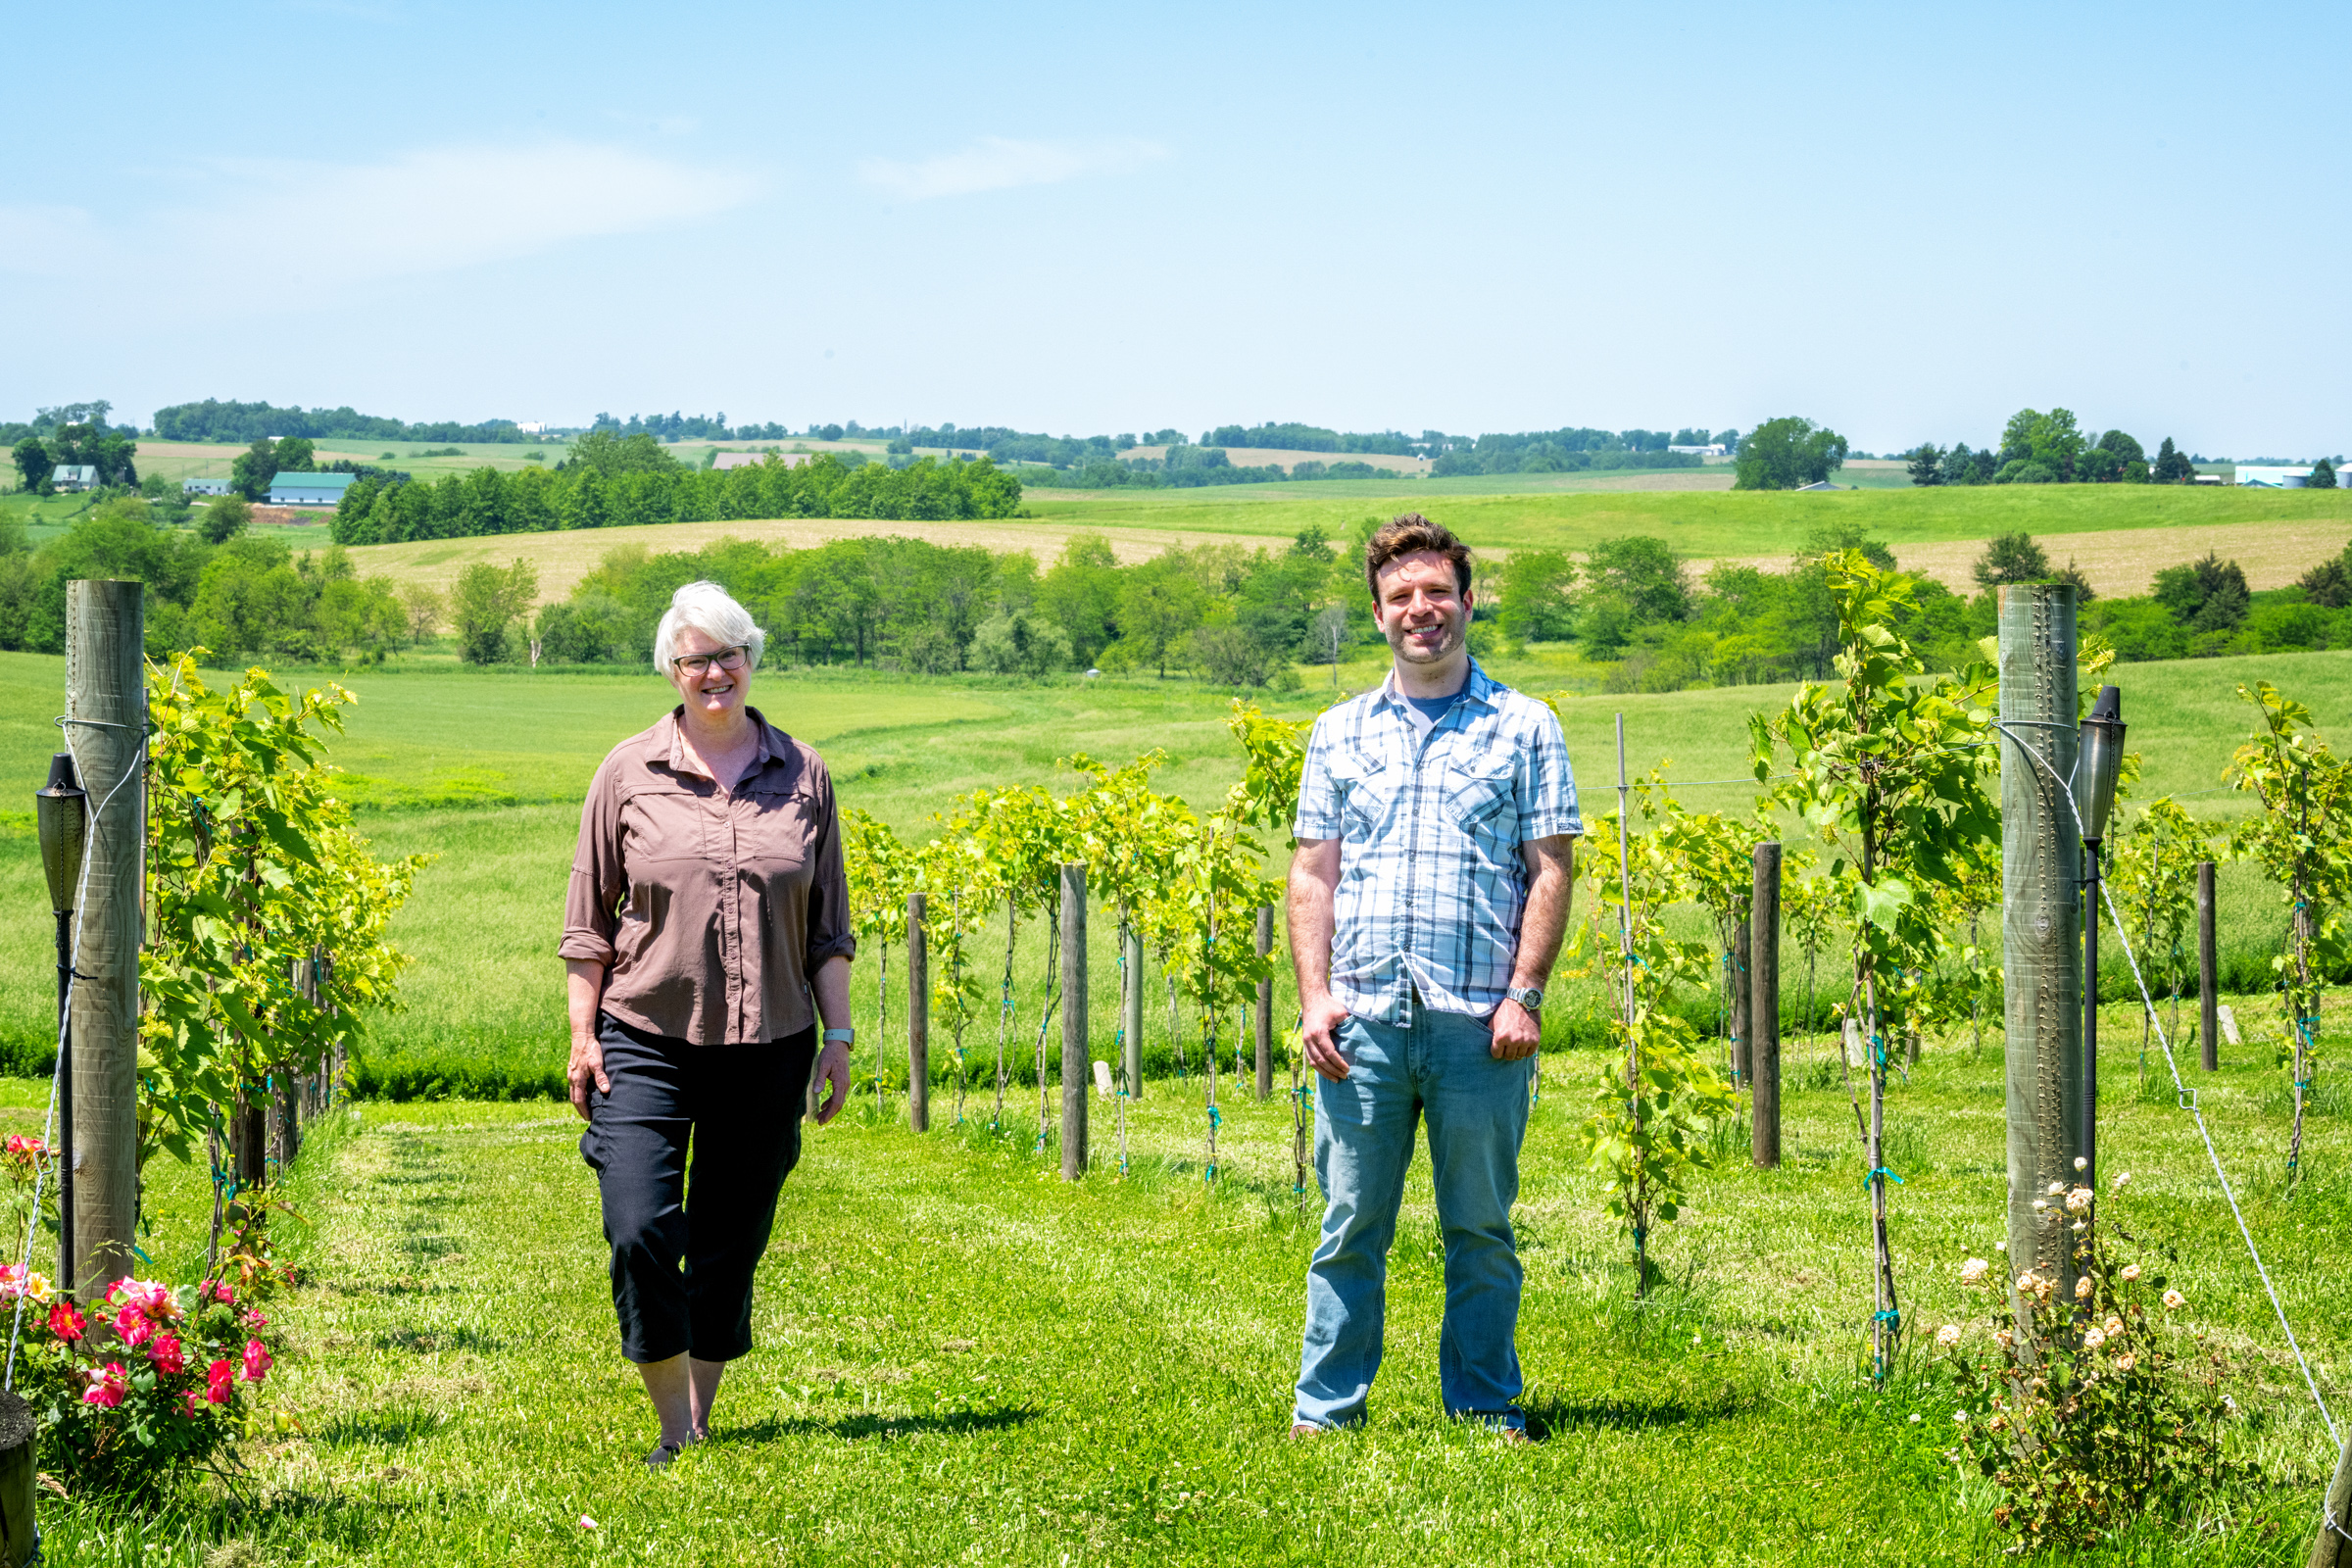 University of Iowa faculty member Kristy Walker and Iowa graduate student Matt Bare at a vineyard near Iowa City